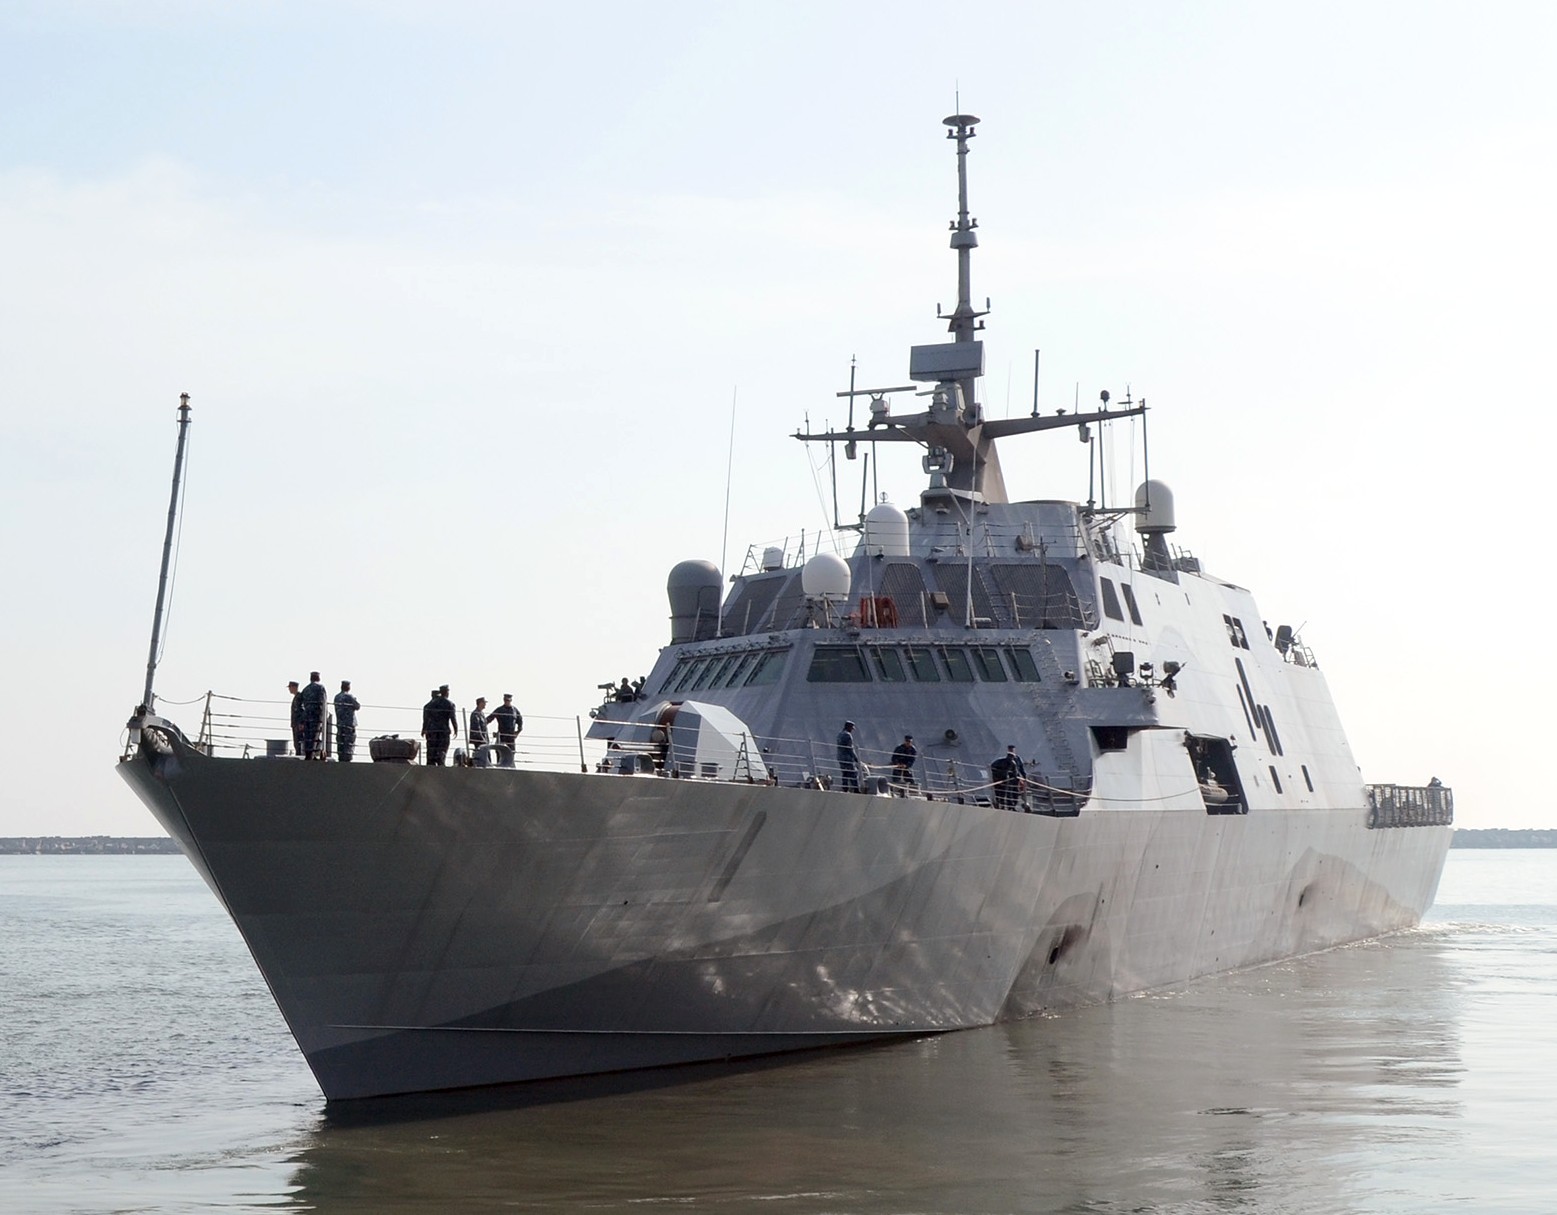 lcs-1 uss freedom class littoral combat ship us navy 30 kuantan malaysia